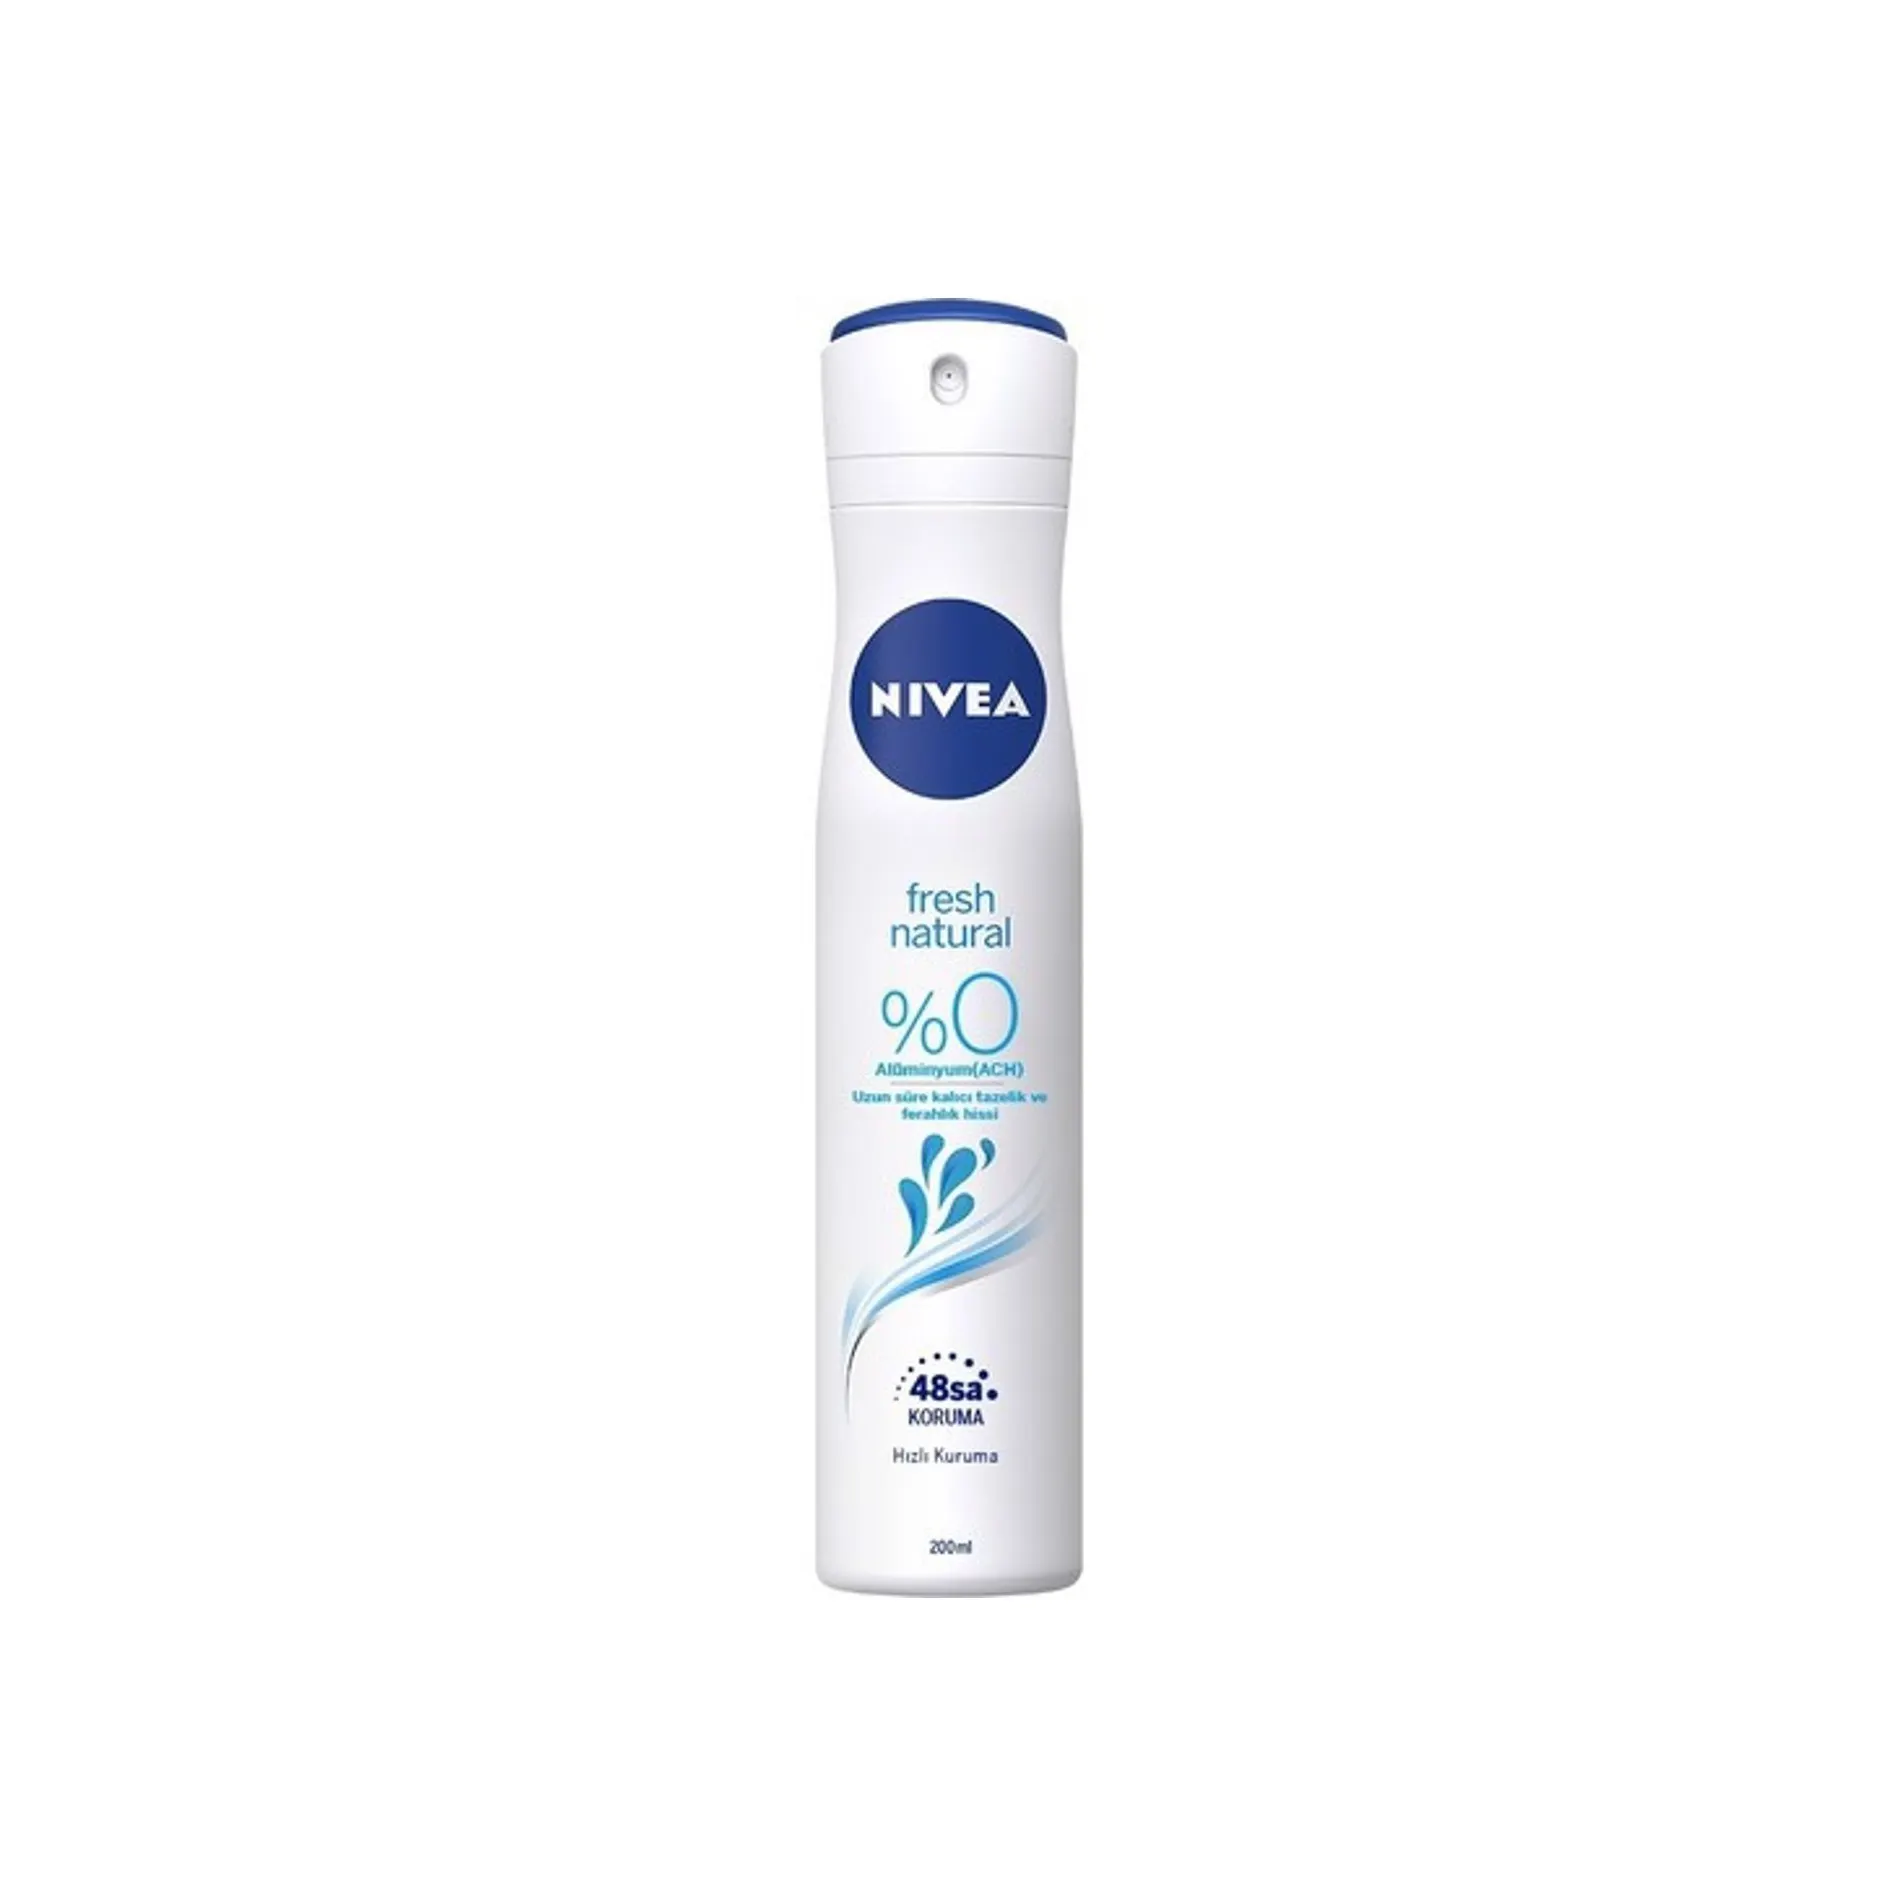 Nivea Longlasting 48 Hours Freshness Body Spray - Pearl & Beauty, 3 Packs x 150 ML / 5.07 Fl. Oz